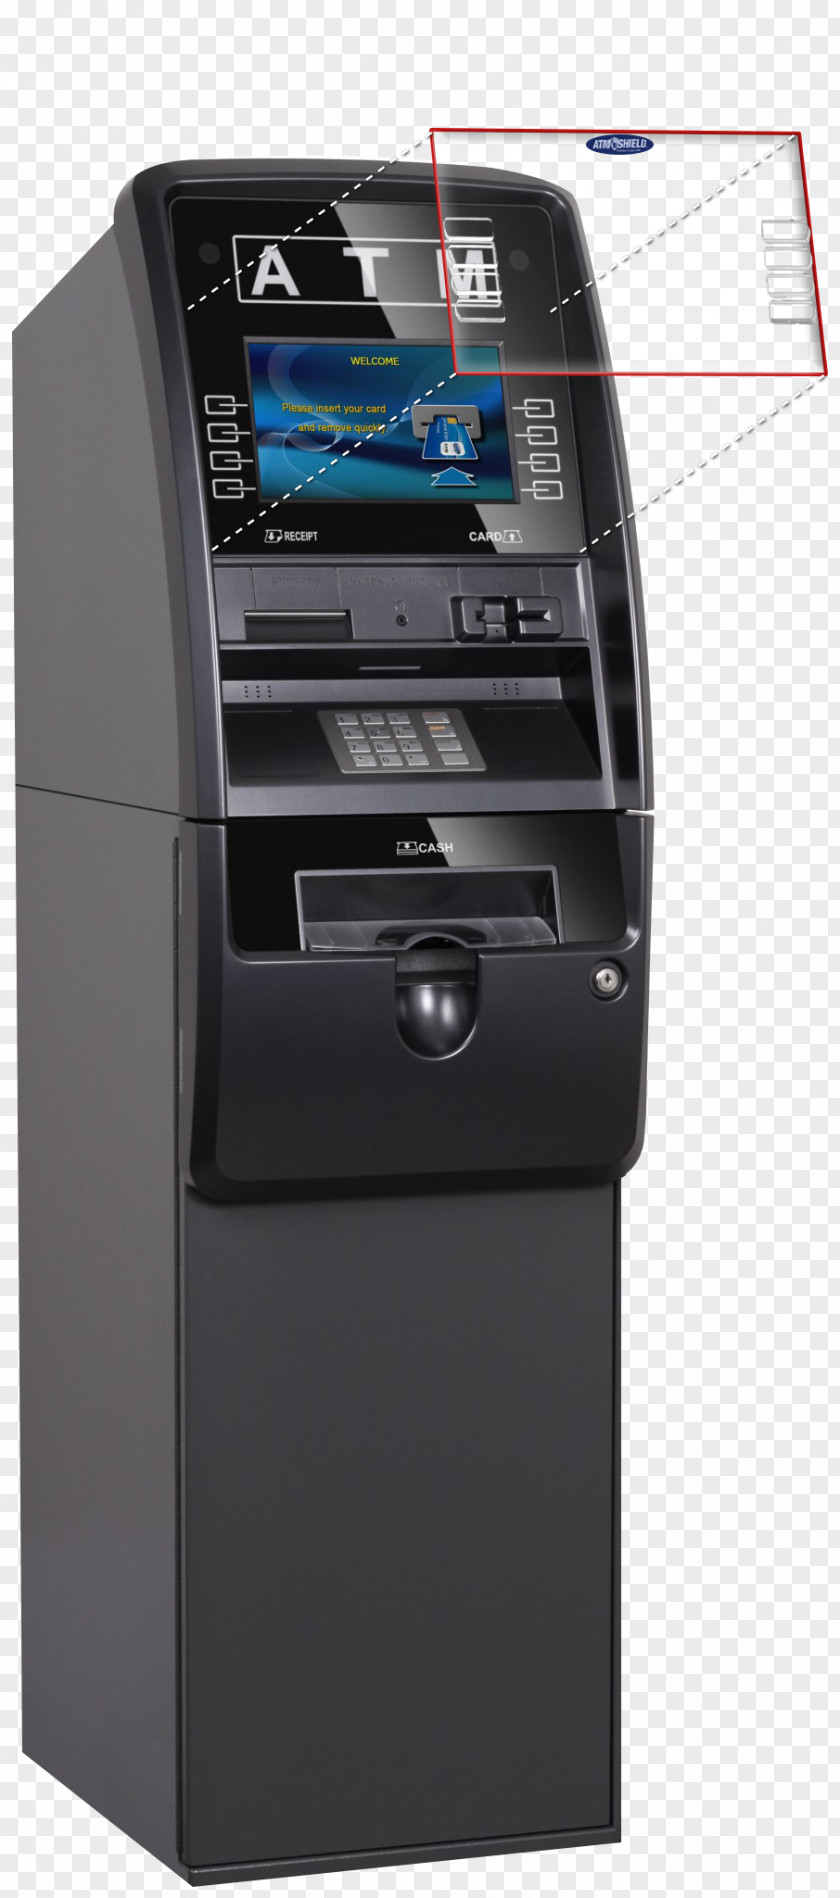 Atm Automated Teller Machine EMV Bank Cash ATM Card PNG